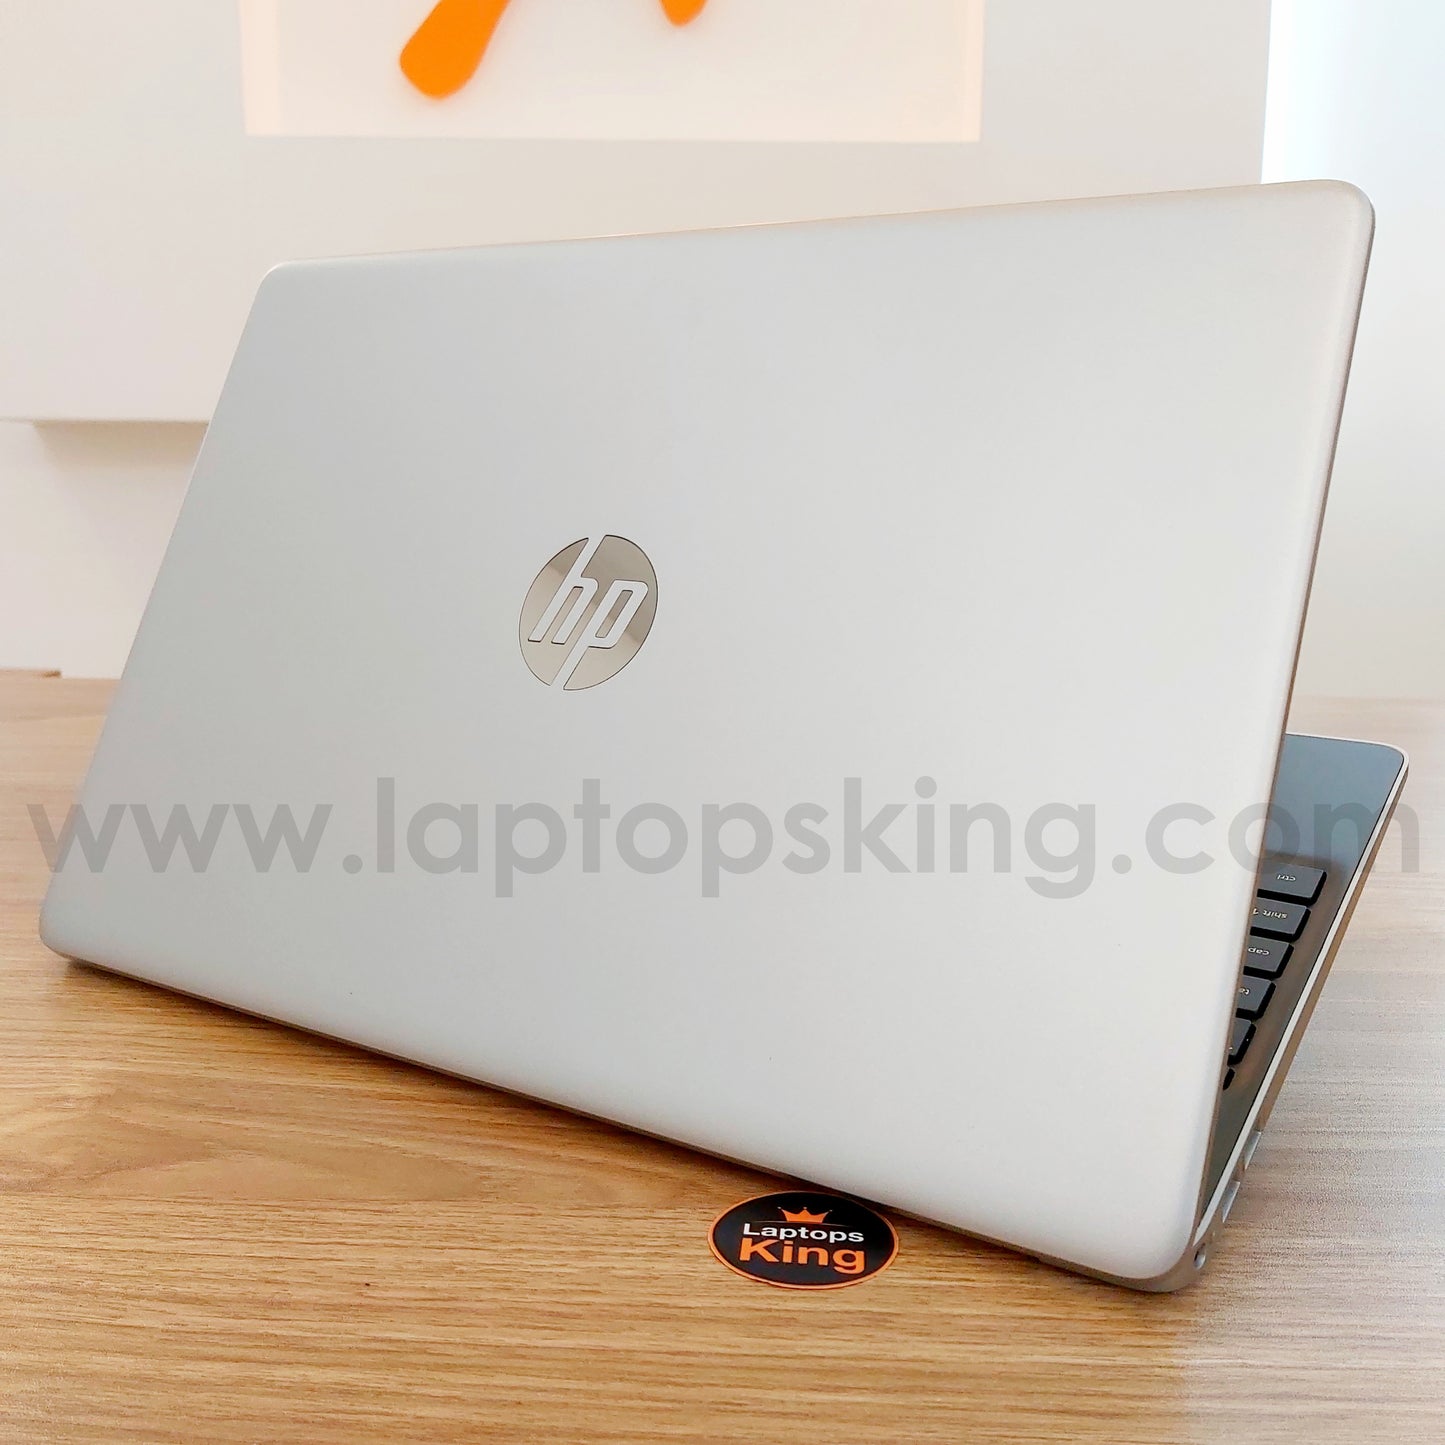 HP 15-DY1 i7-1065G7 Iris Plus Laptop Offers (Brand New)